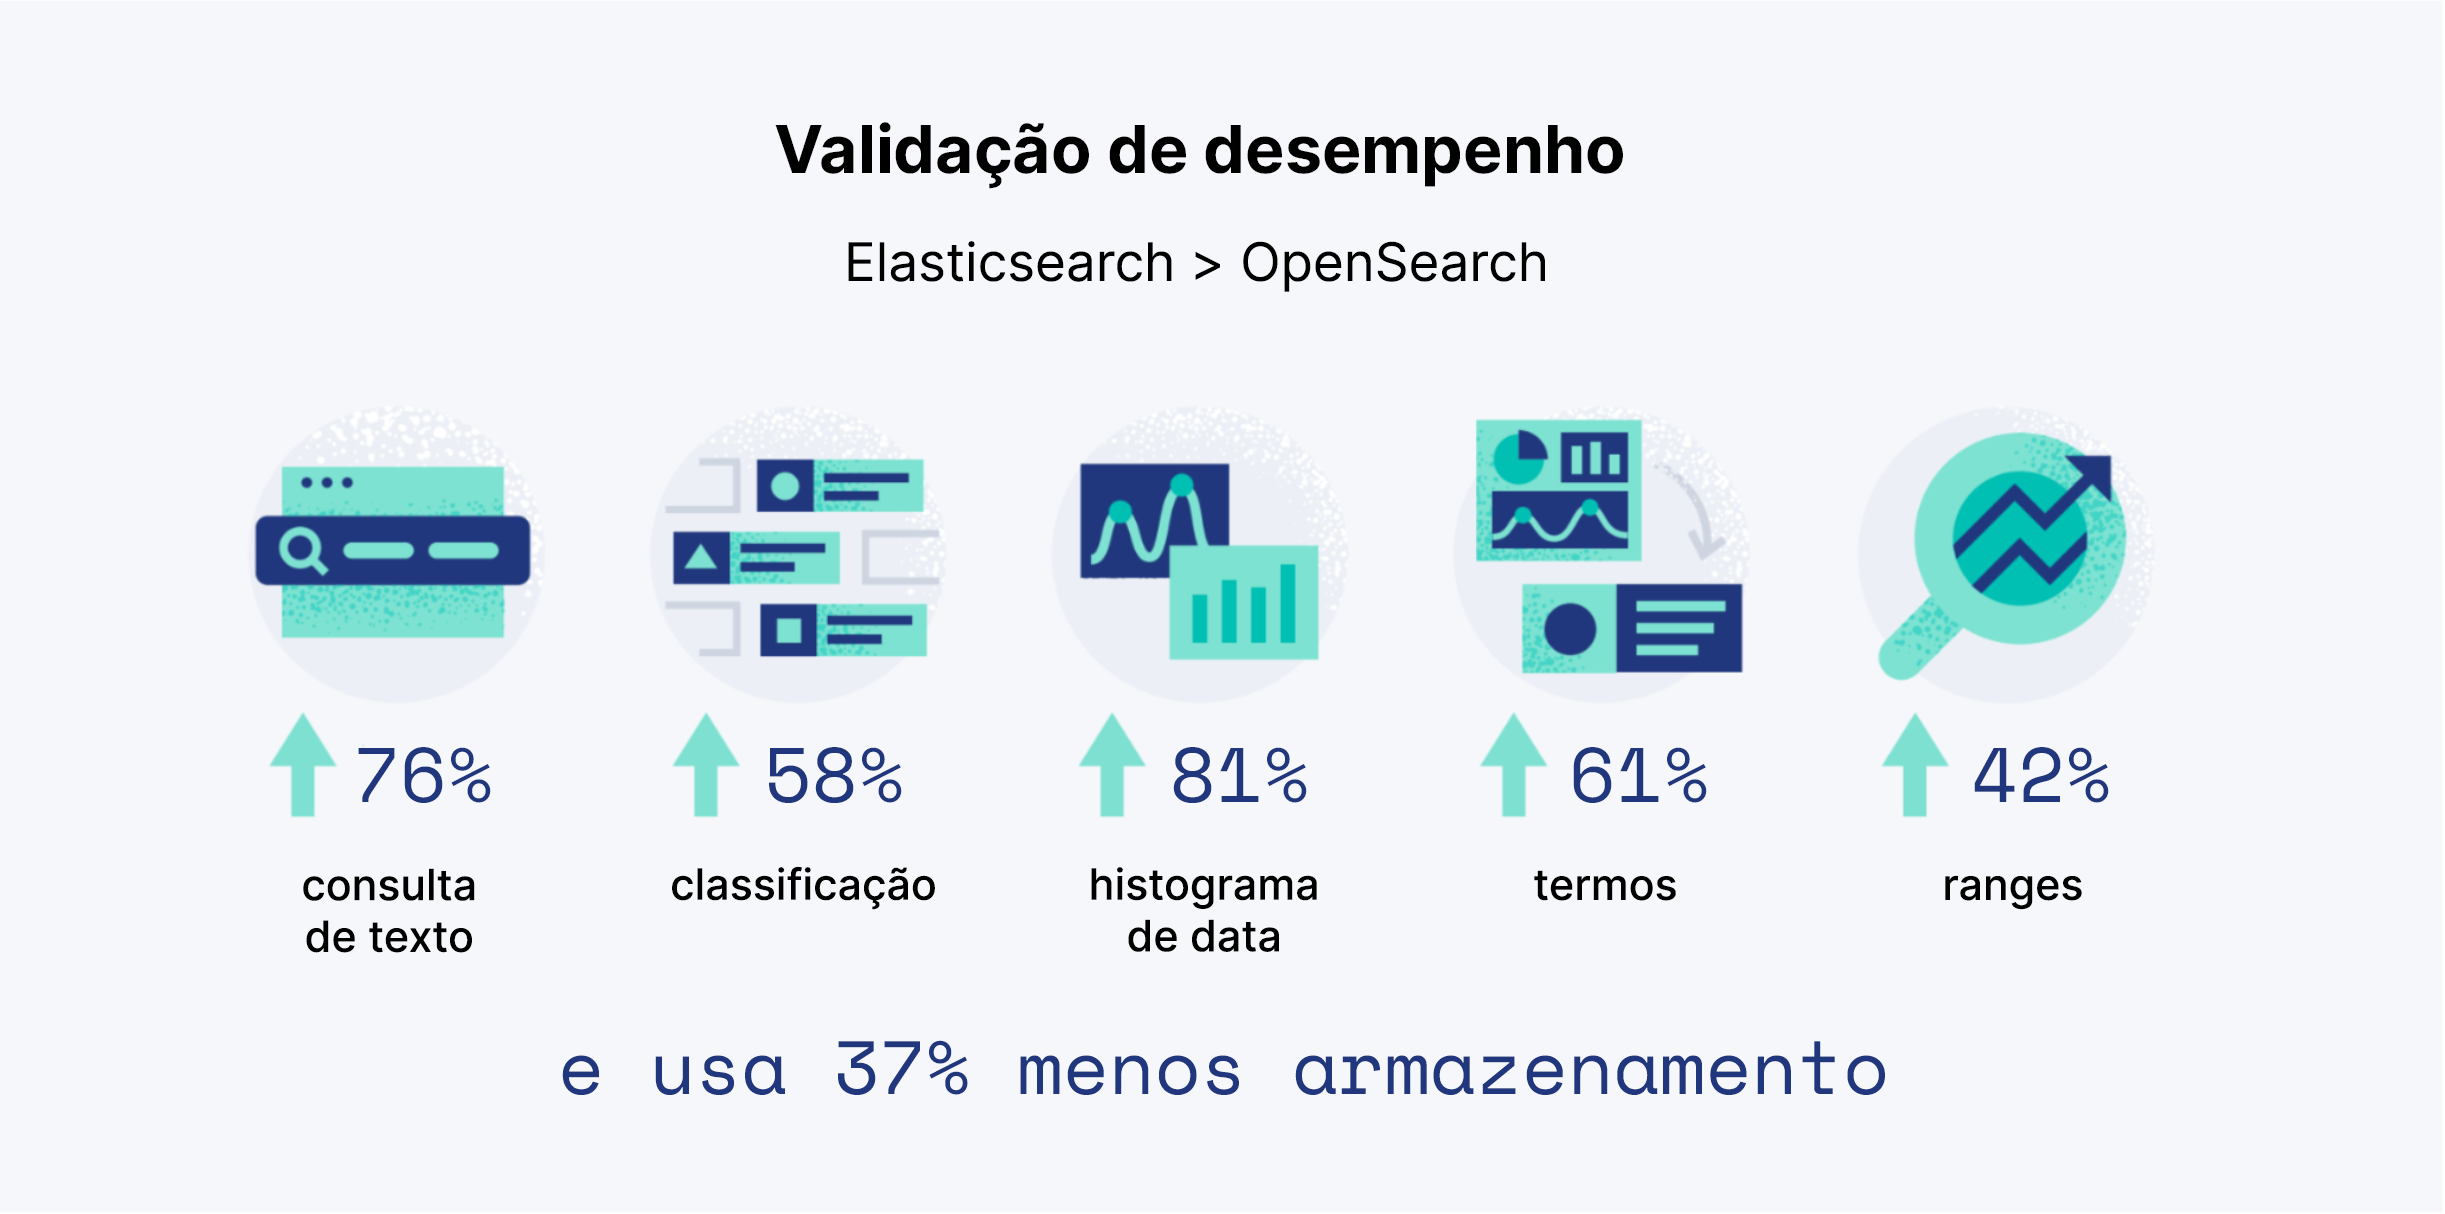 Validação de desempenho: Elasticsearch > OpenSearch